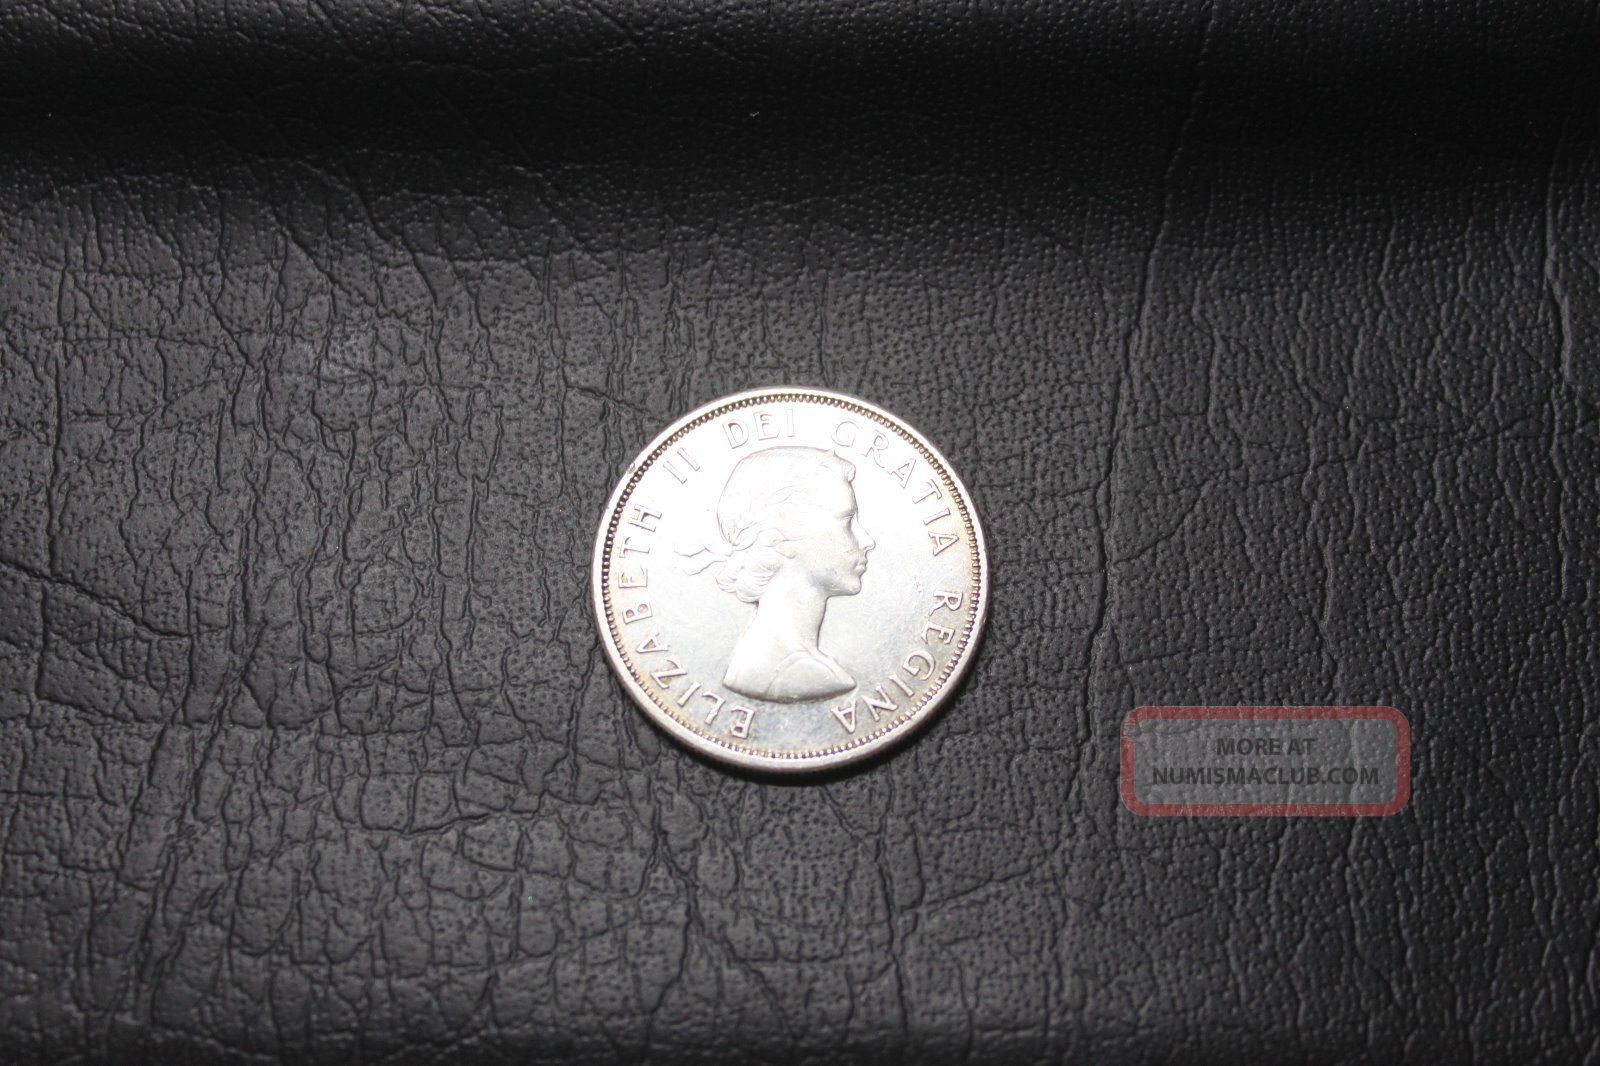 1 Canada Silver Half Dollar Coin1600 x 1066